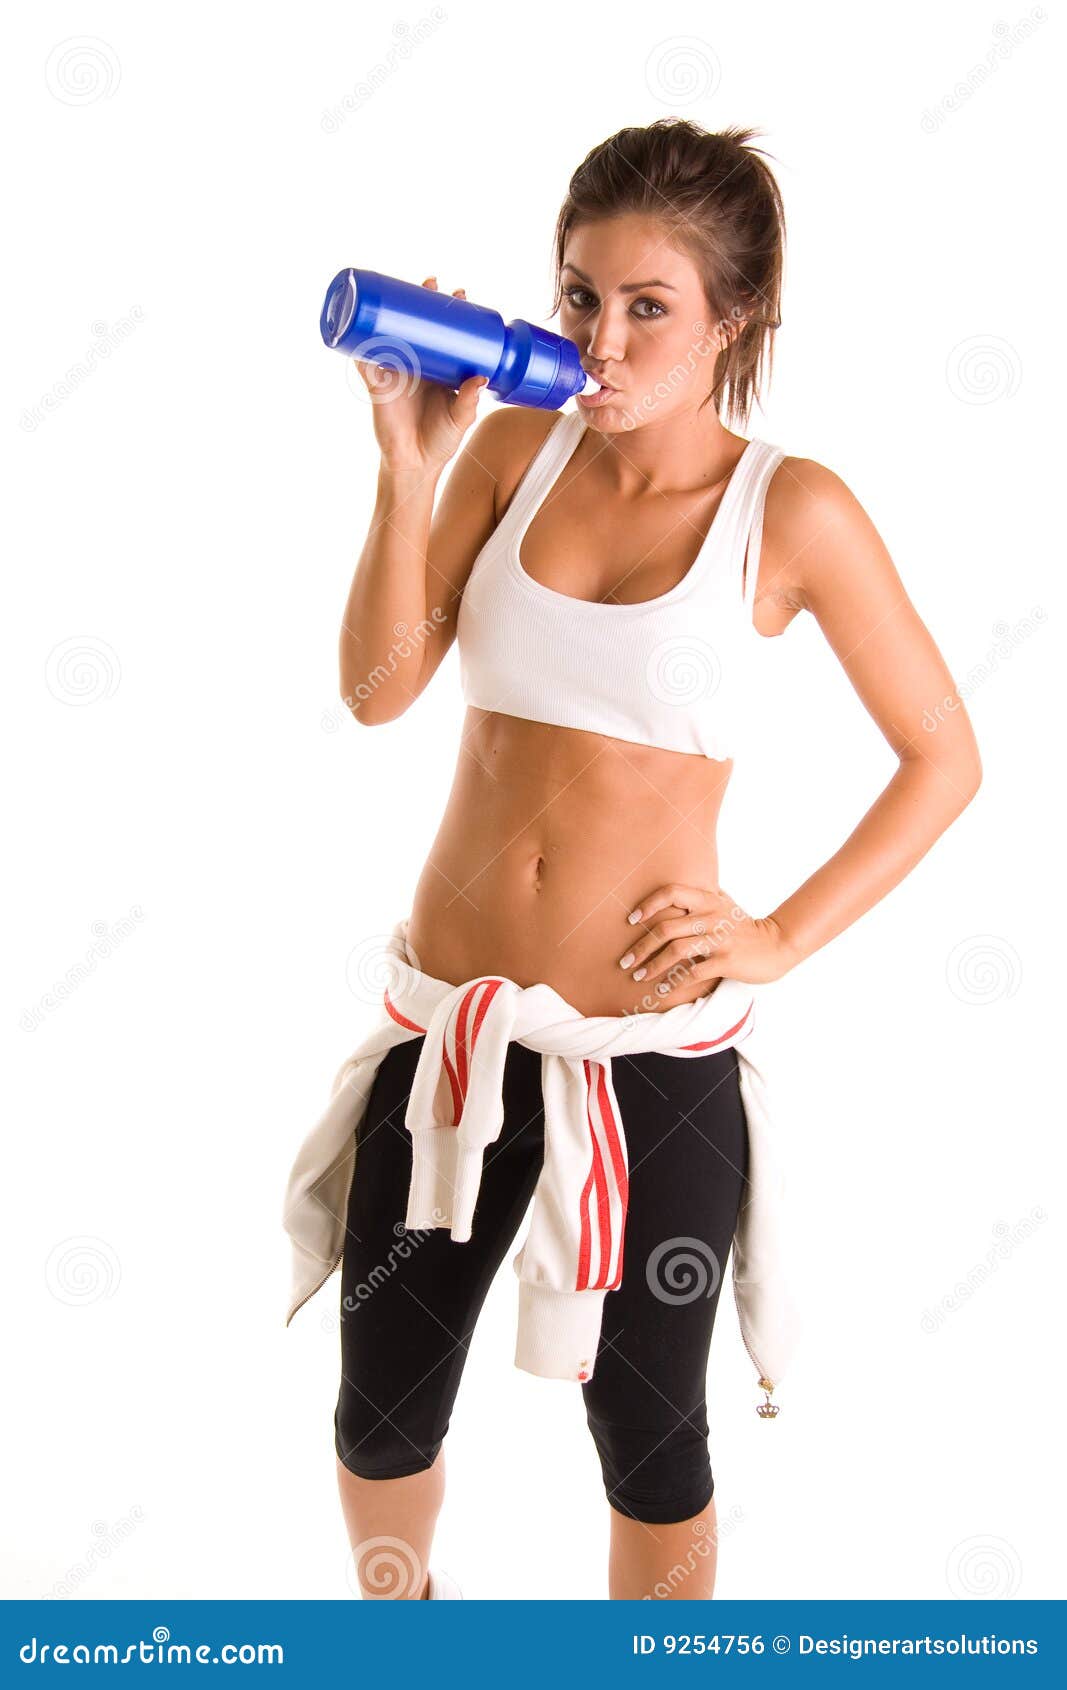 fitness-woman-drinking-fluids-9254756.jpg